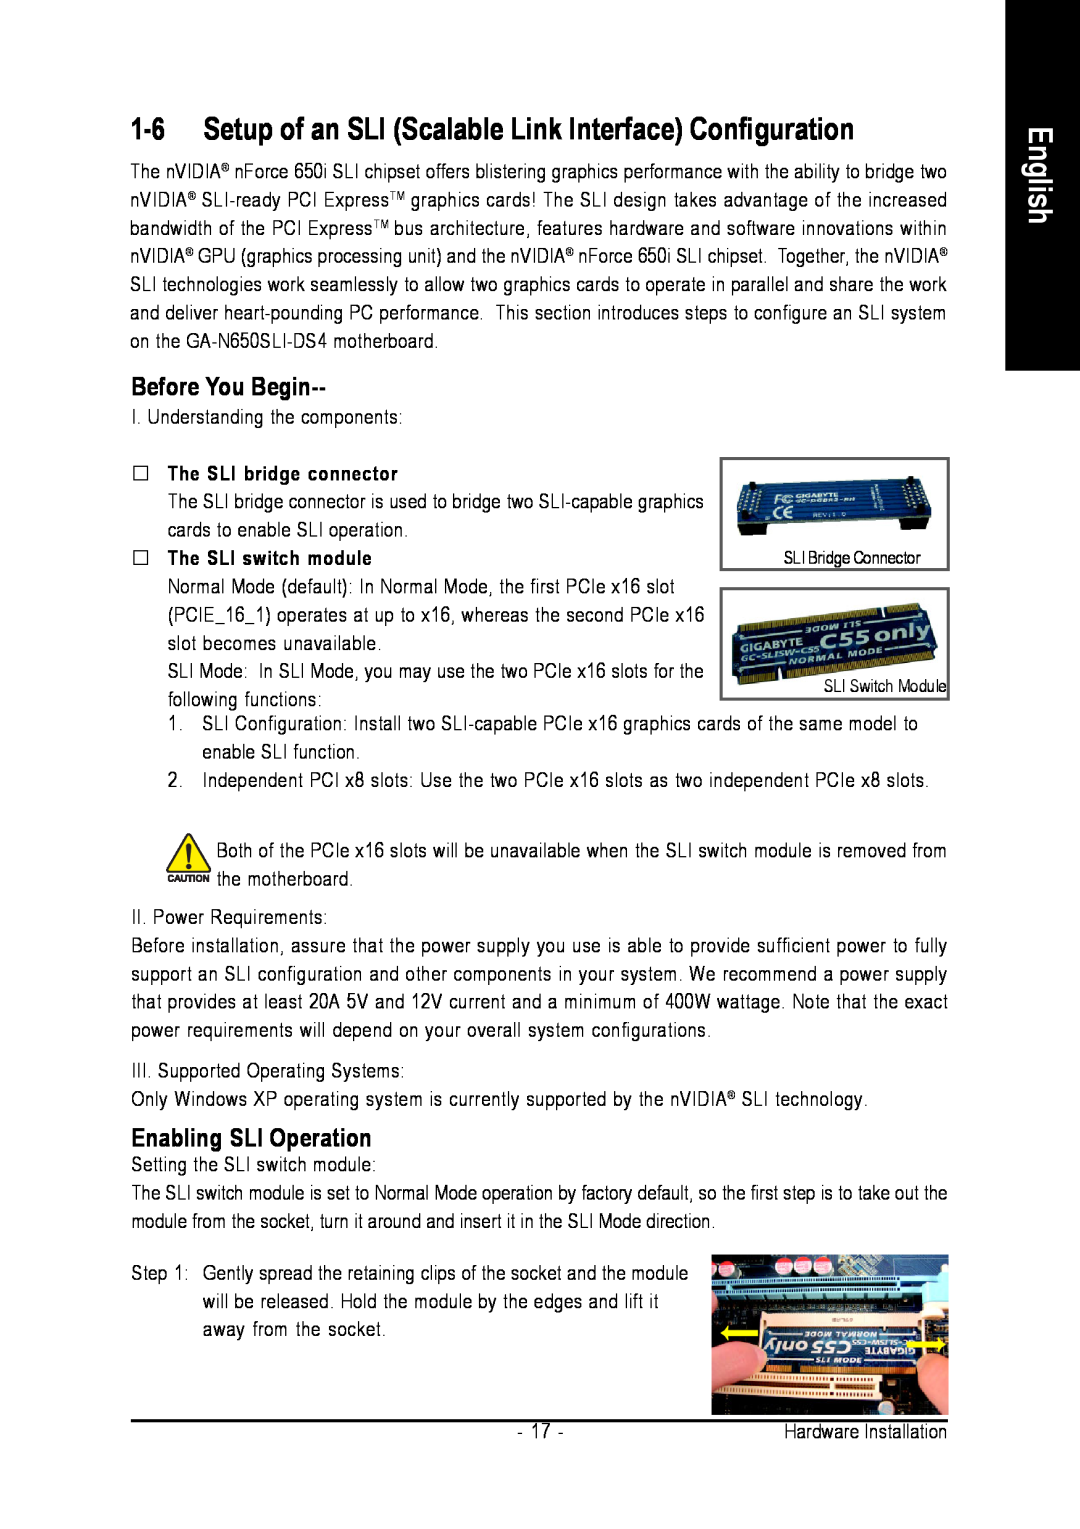 Intel GA-N650SLI-DS4 user manual Setup of an SLI Scalable Link Interface Configuration, English, Before You Begin 